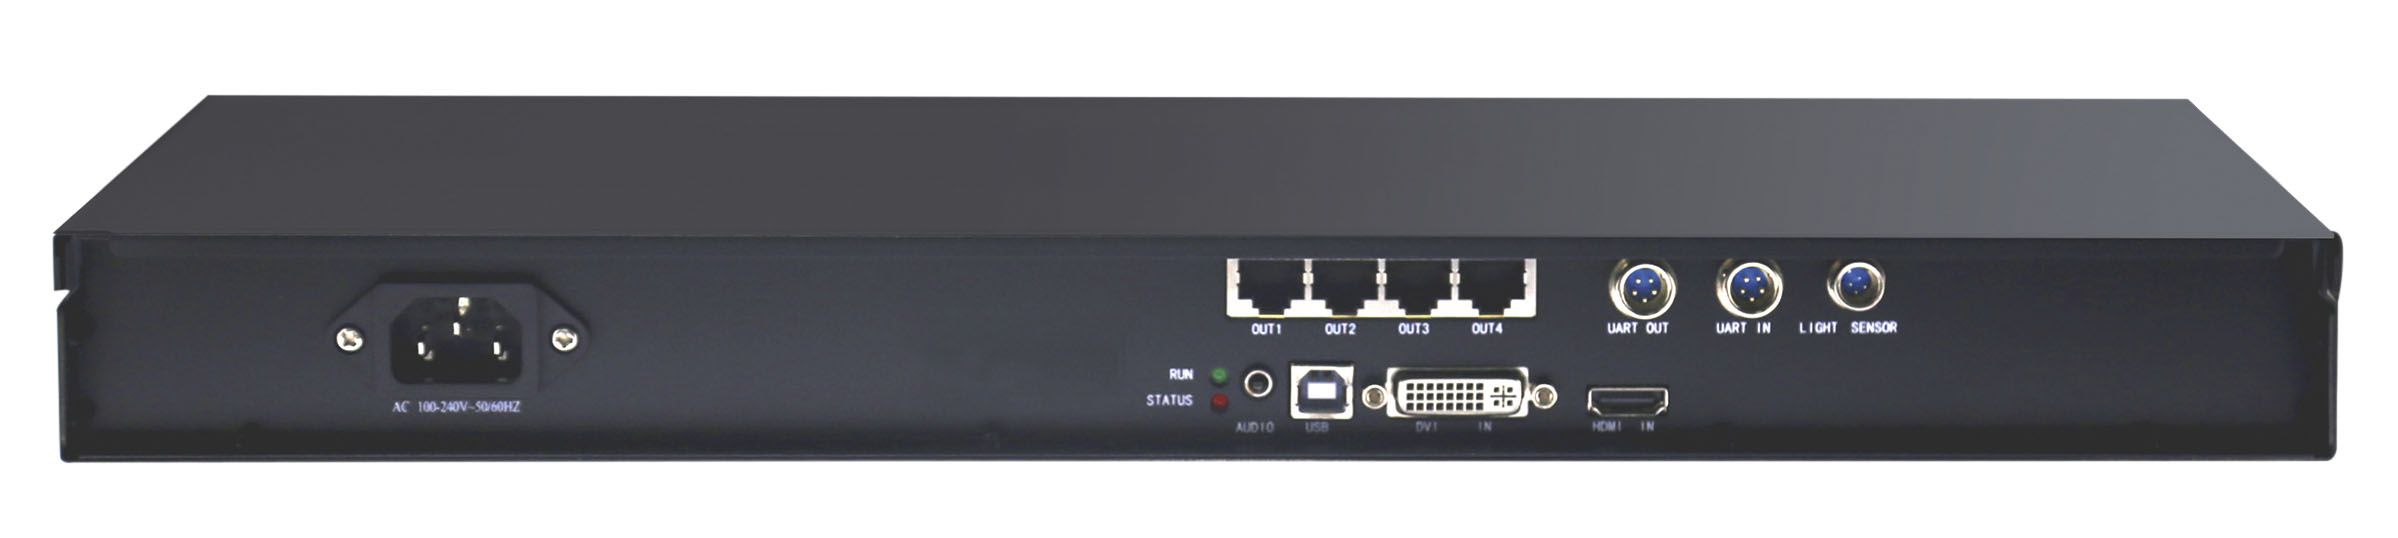 Novastar MCTRL600 Senderbox für LED-Screen